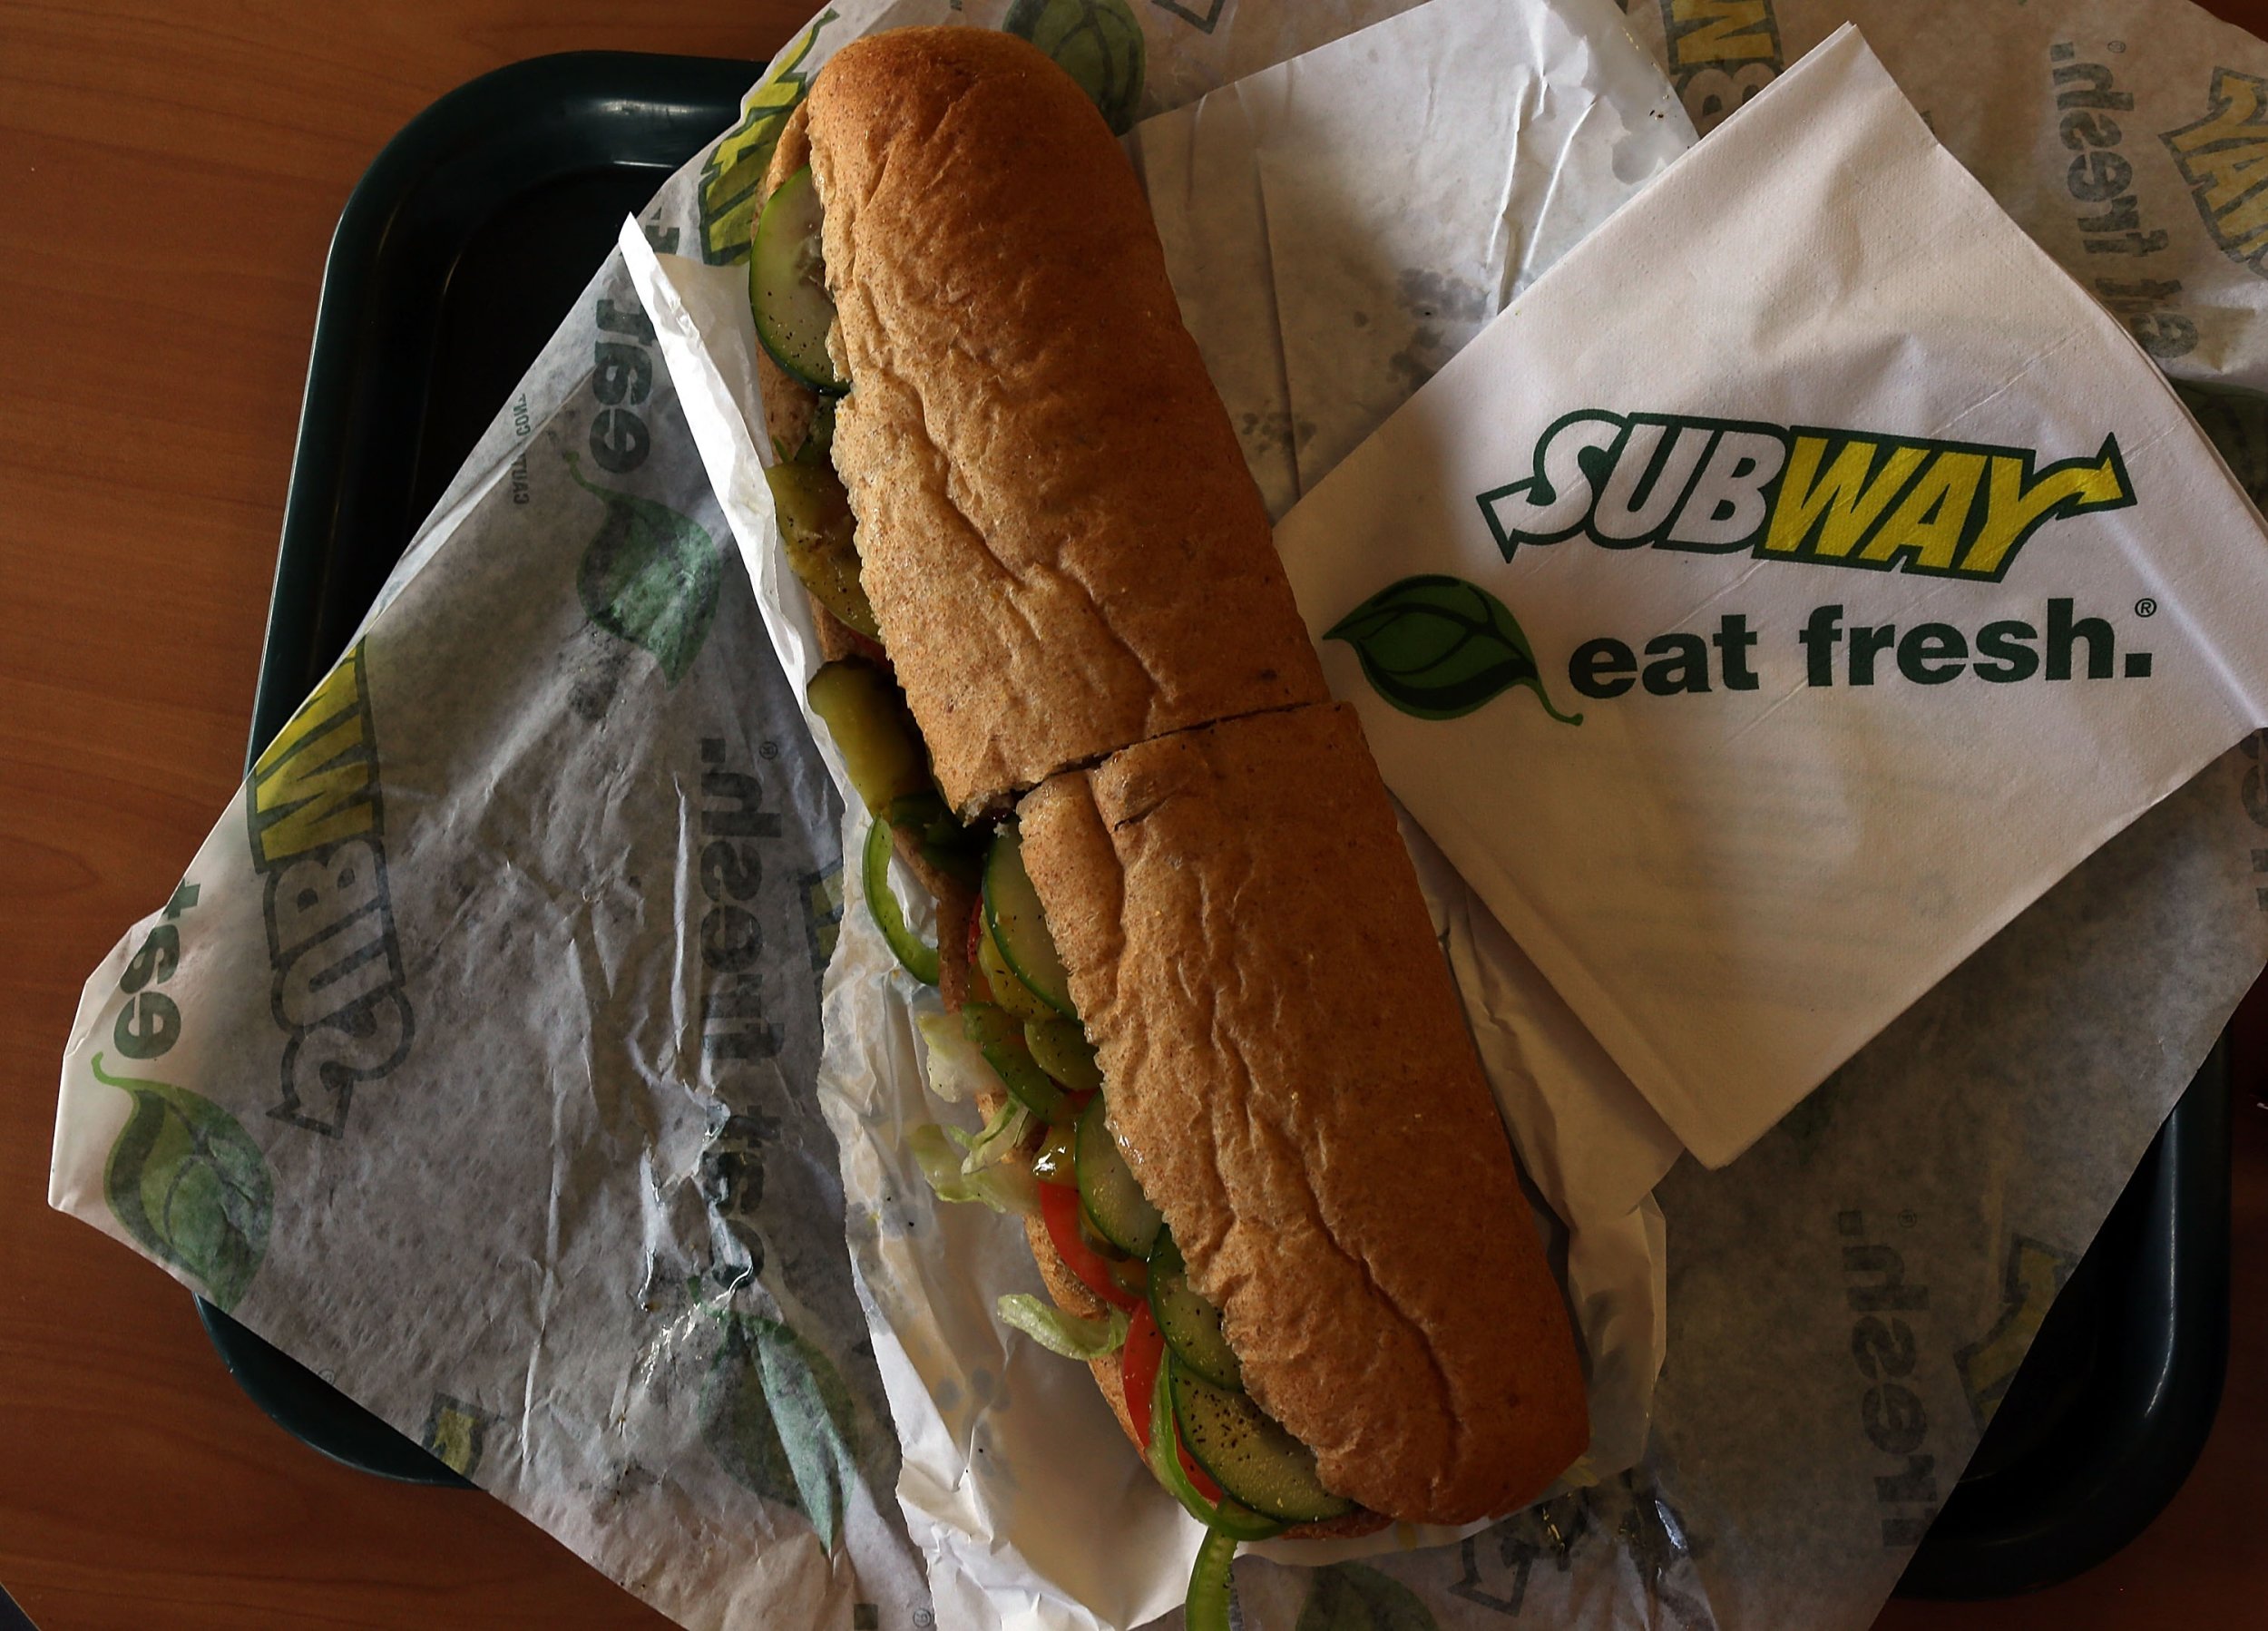 Subway Menu Adds Low Calorie Bread Option With Zero Sugar, Carb